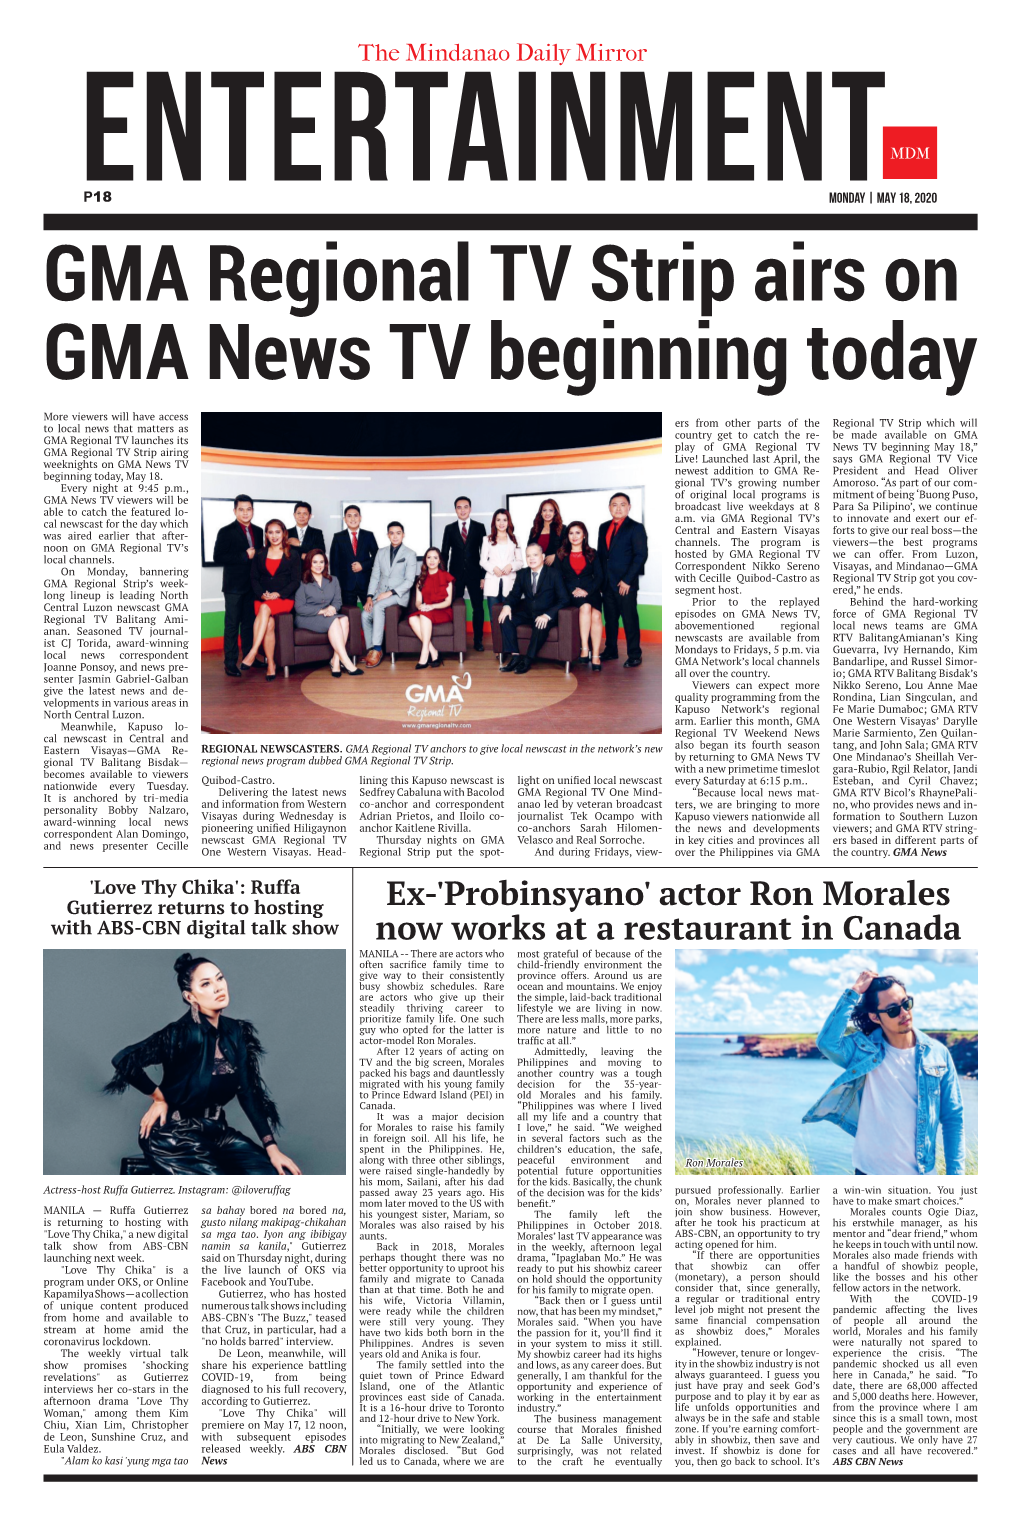 GMA Regional TV Strip Airs on GMA News TV Beginning Today